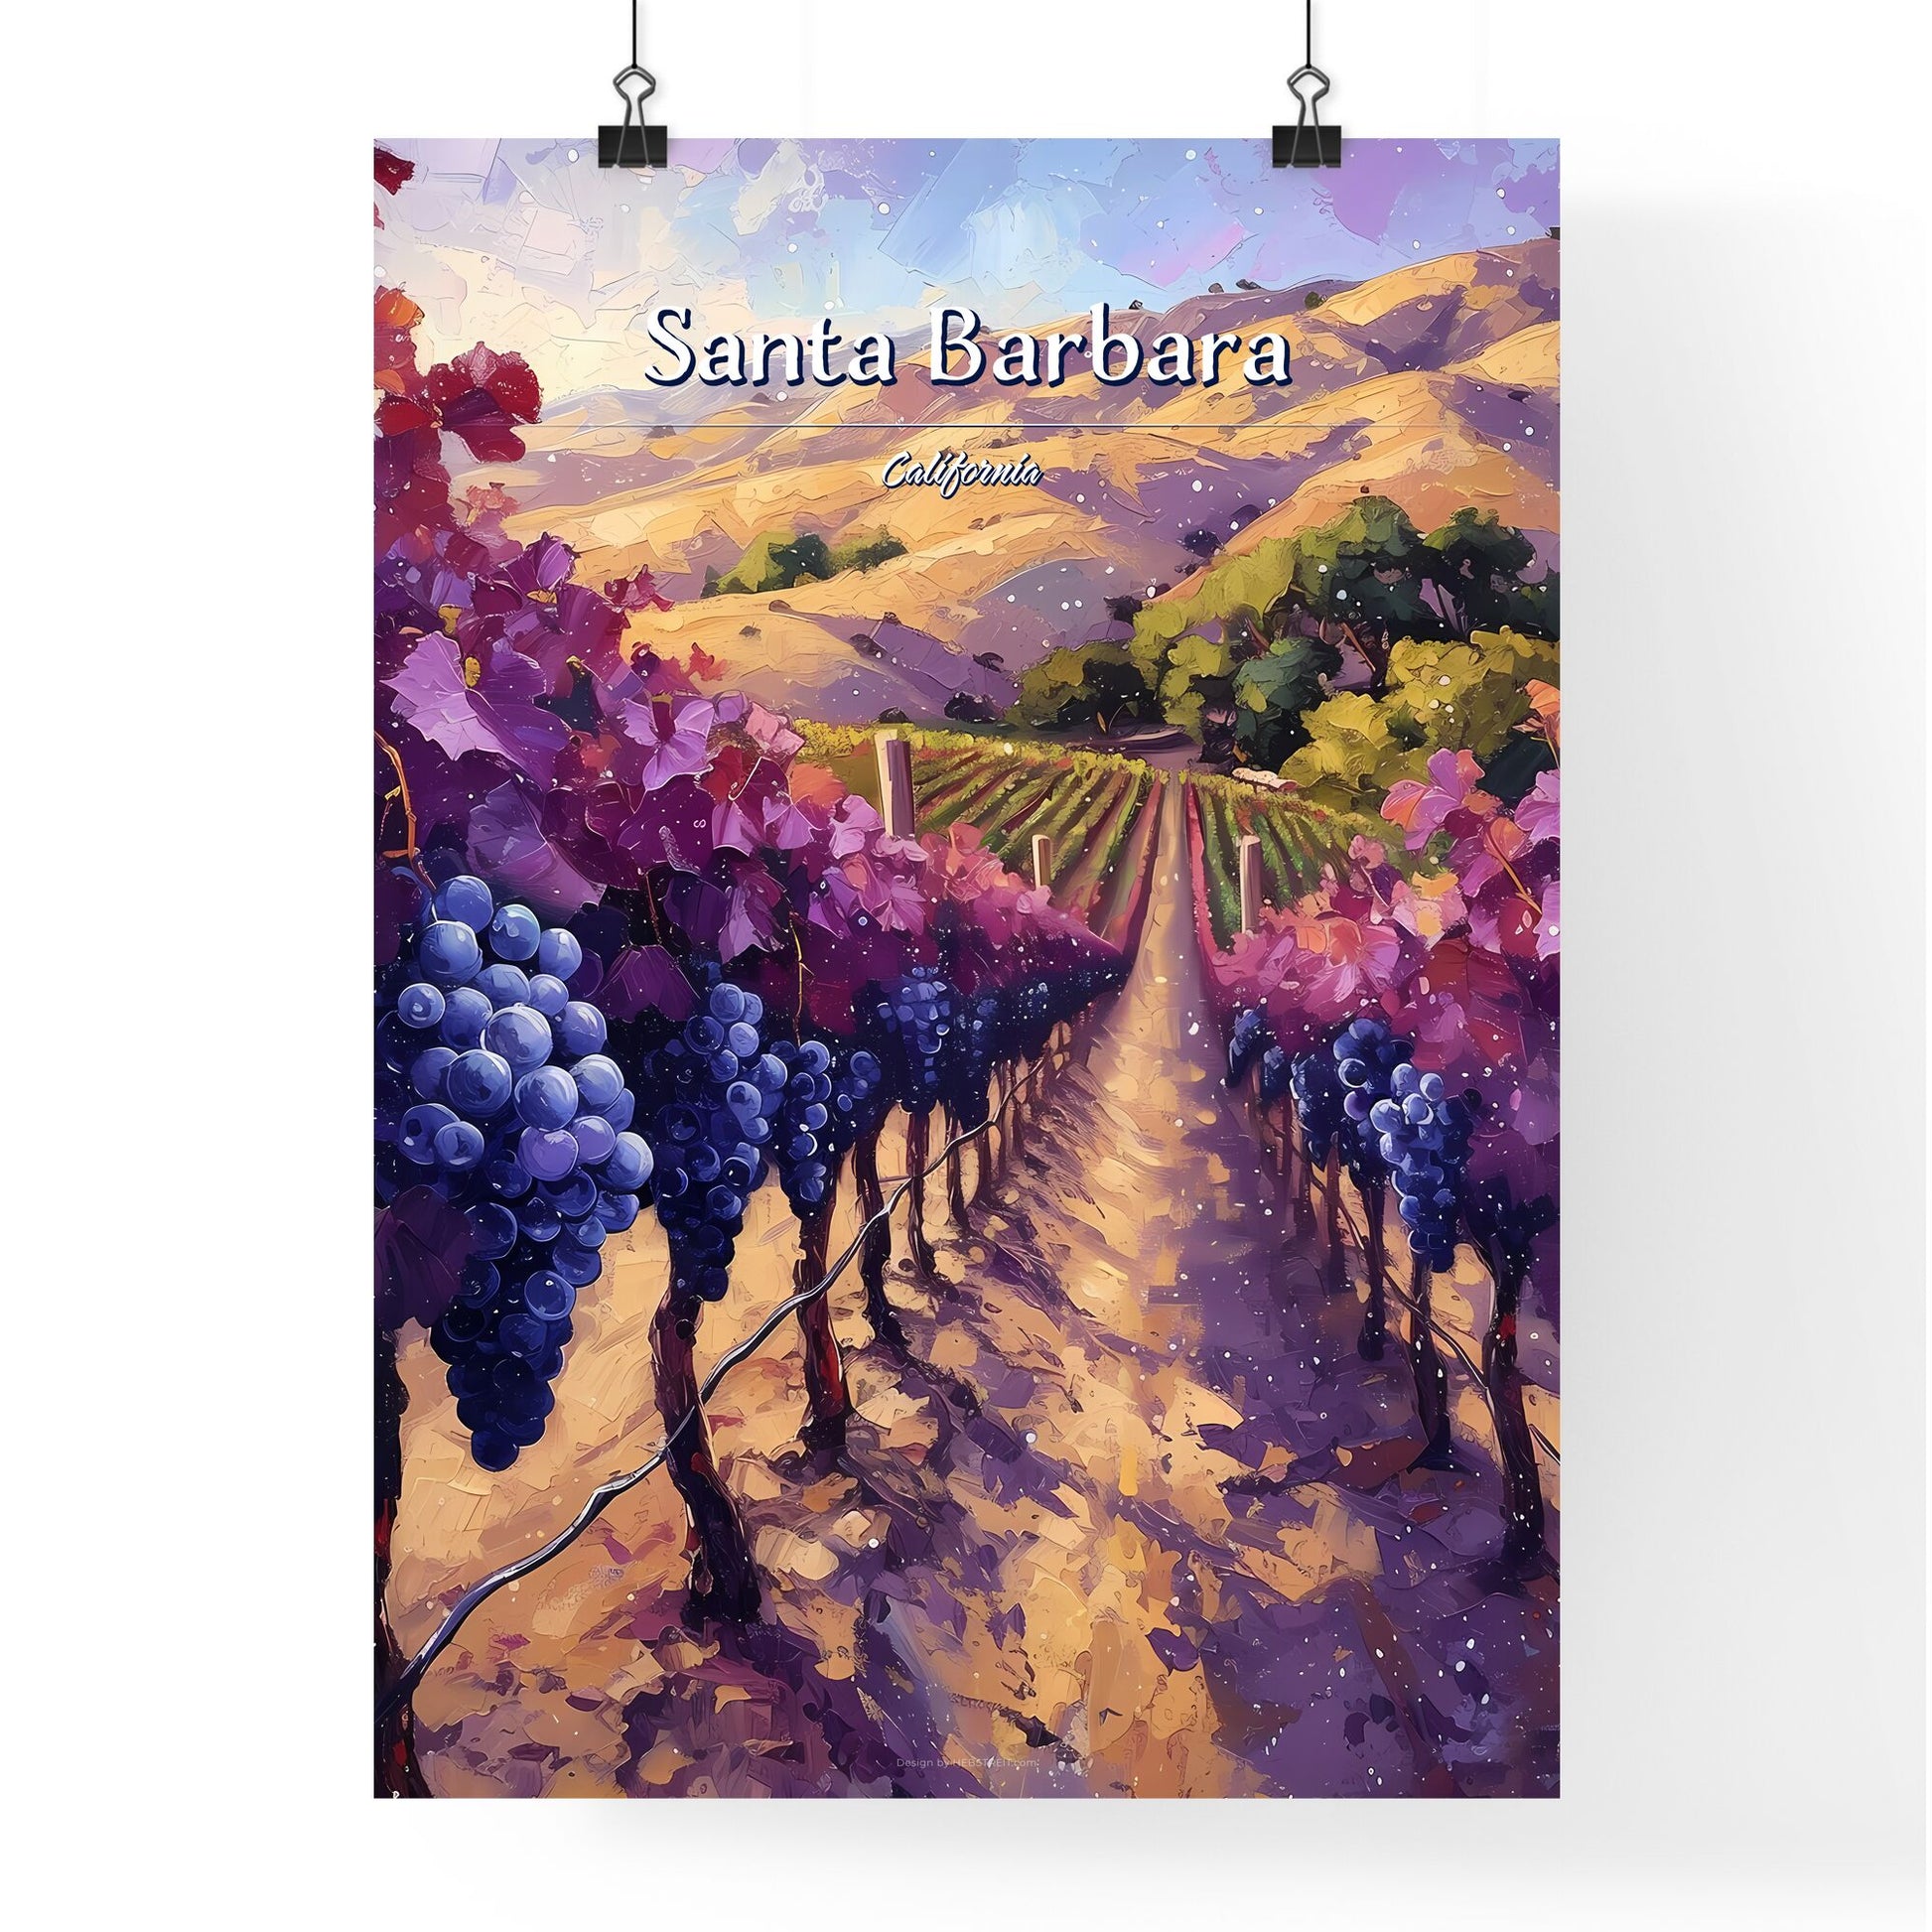 Santa Barbara, California - Art print of a painting of a vineyard Default Title